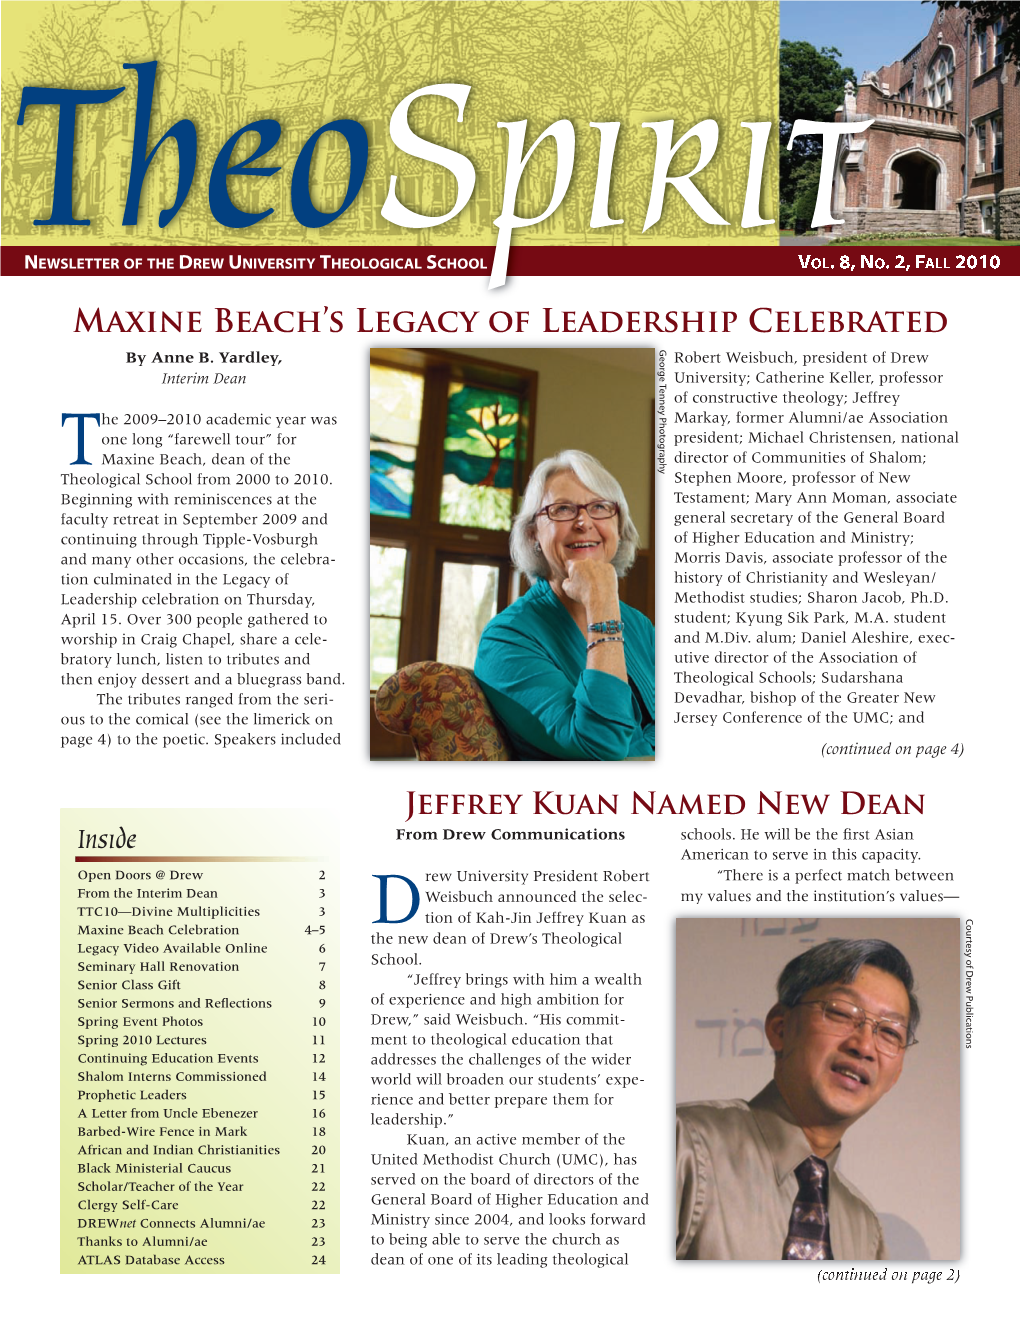 Maxine Beach's Legacy of Leadership Celebrated